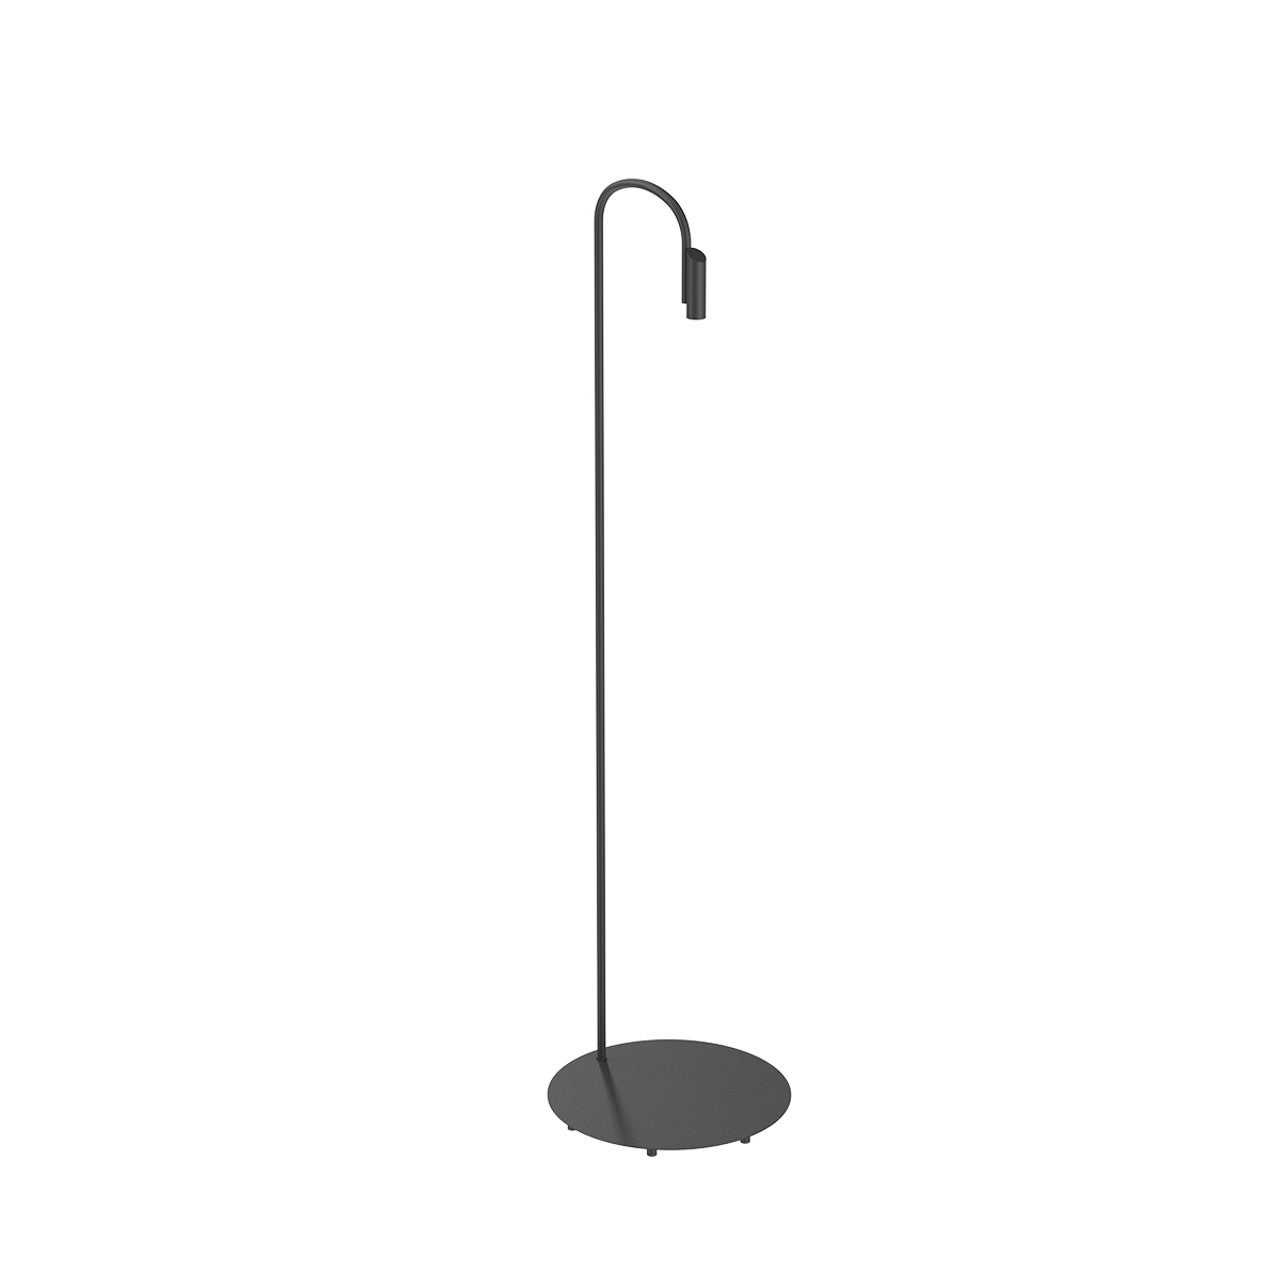 Flos Caule 2700K Model 4 Outdoor Floor Lamp in Black with Regular Shade For Sale